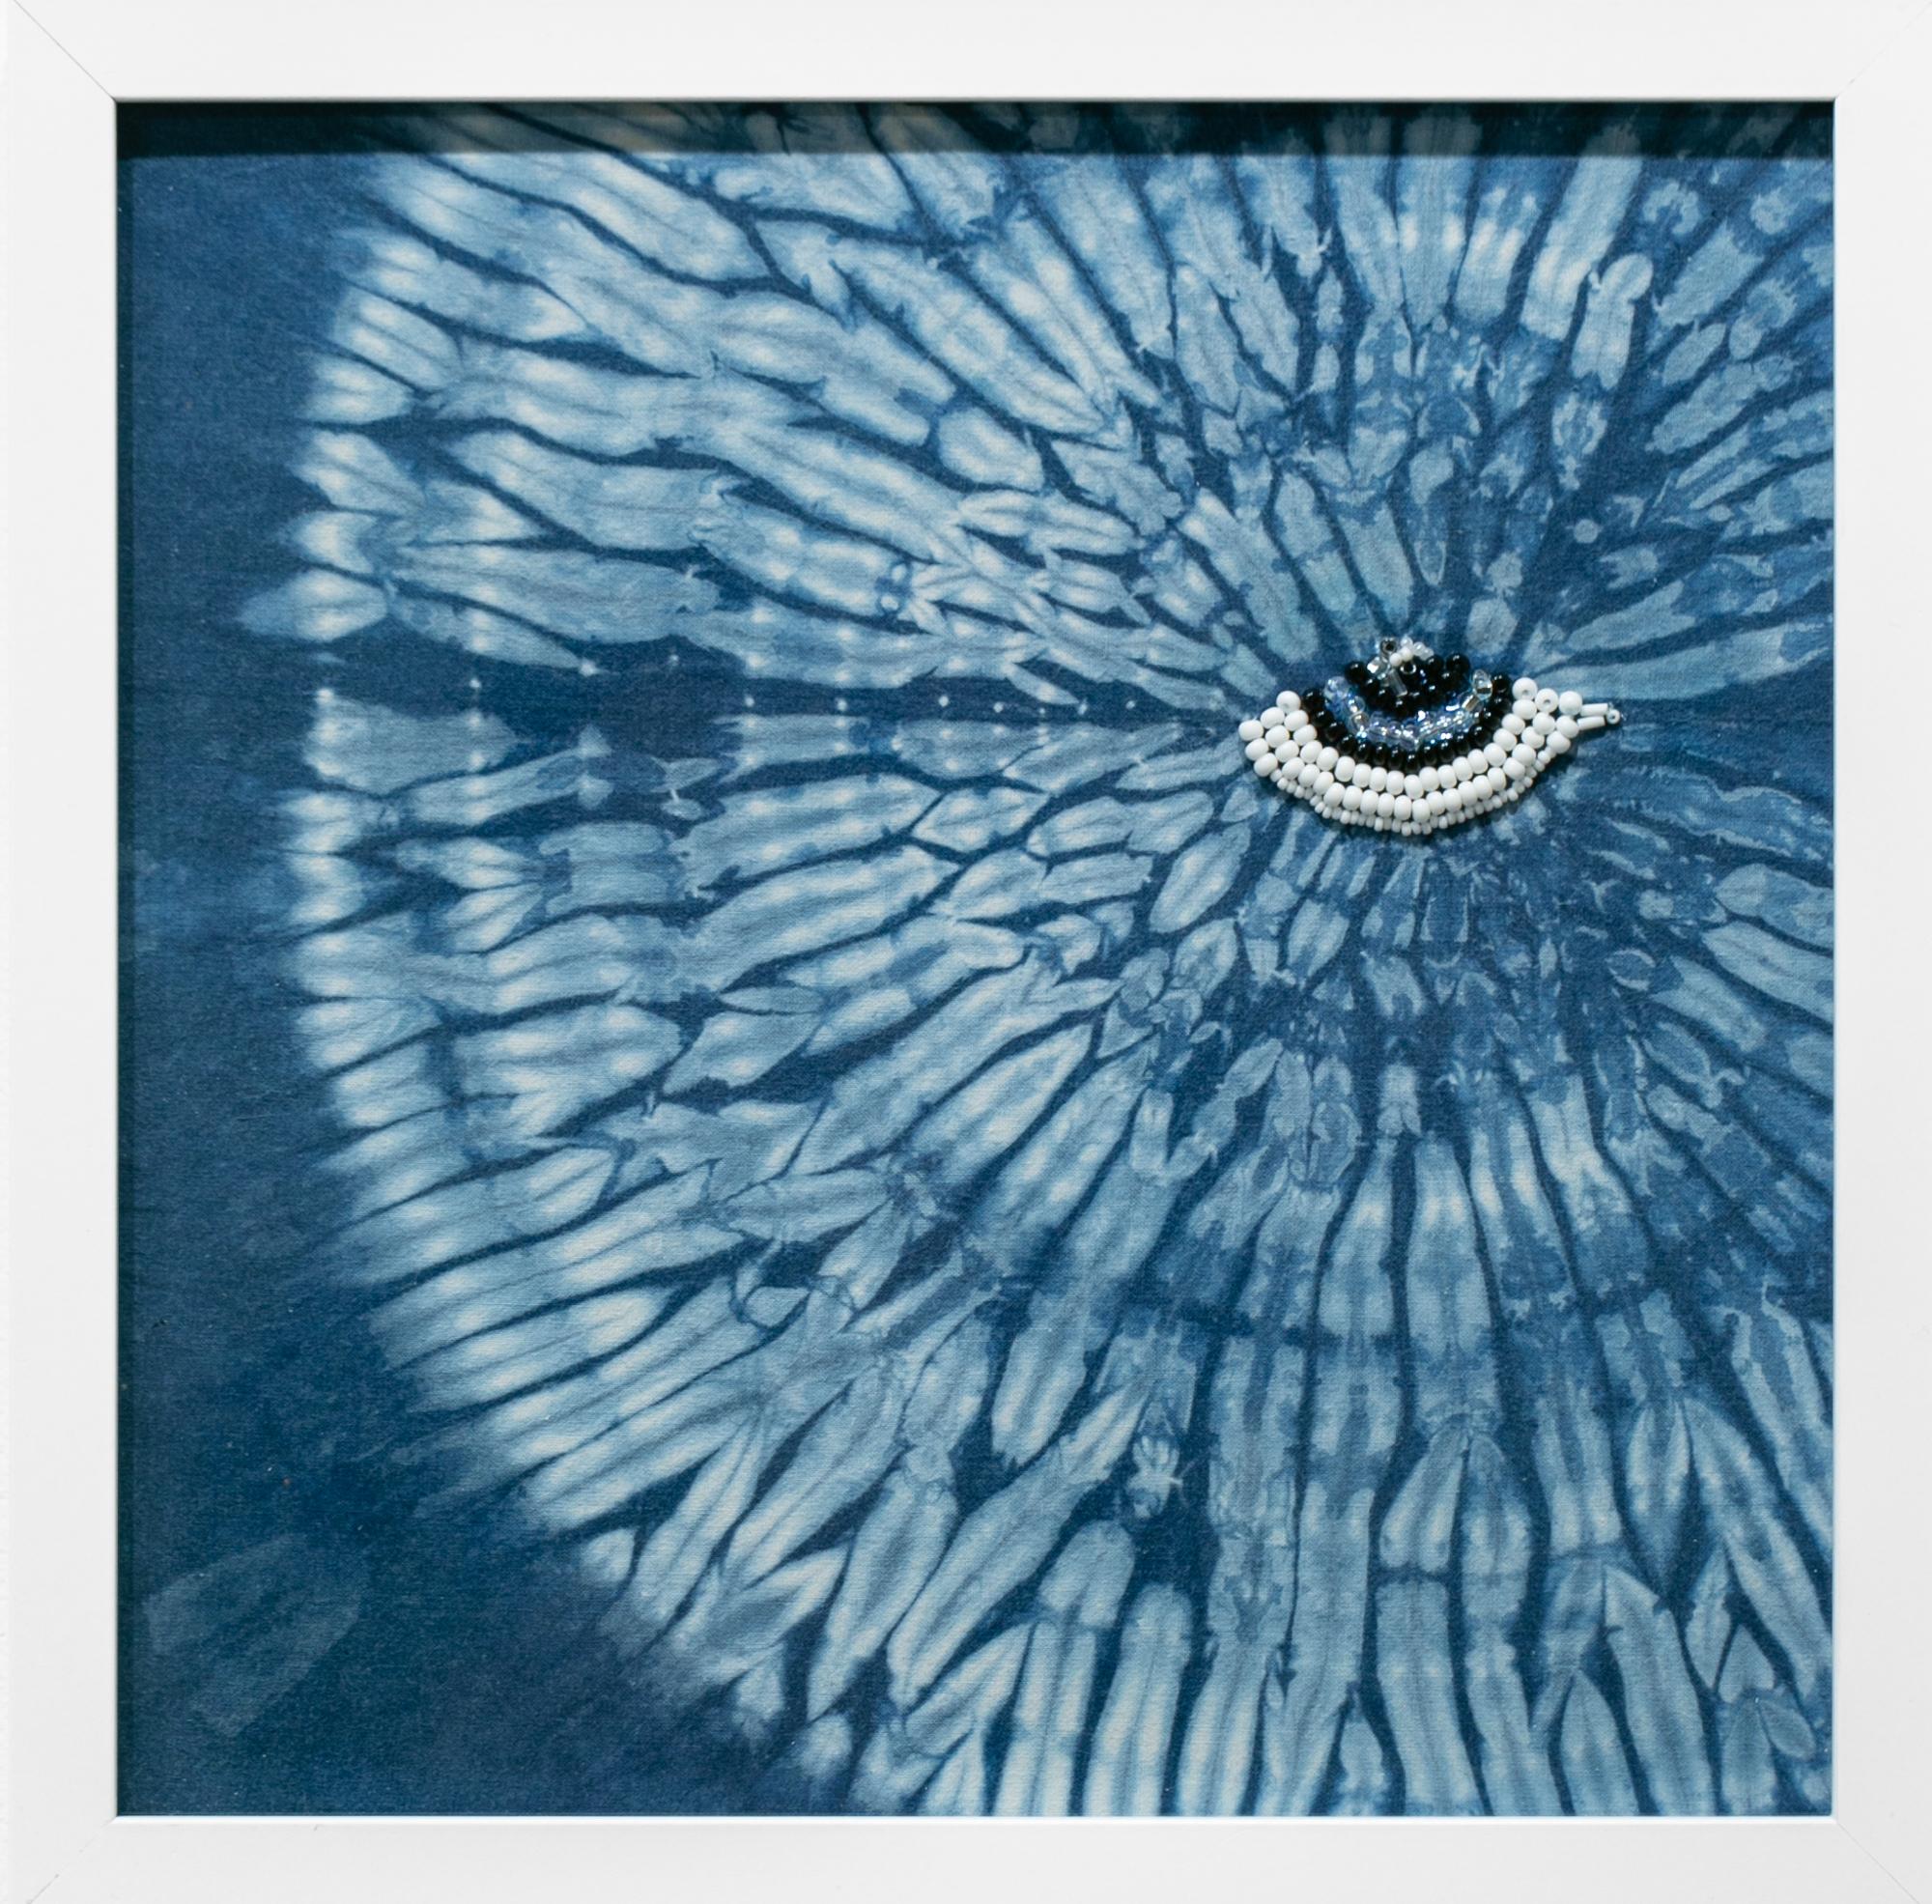 "Gully washer", Blue, Indigo Dye, Sequins, Beaded Embroidery, Eye - Art by Katherine Heisler